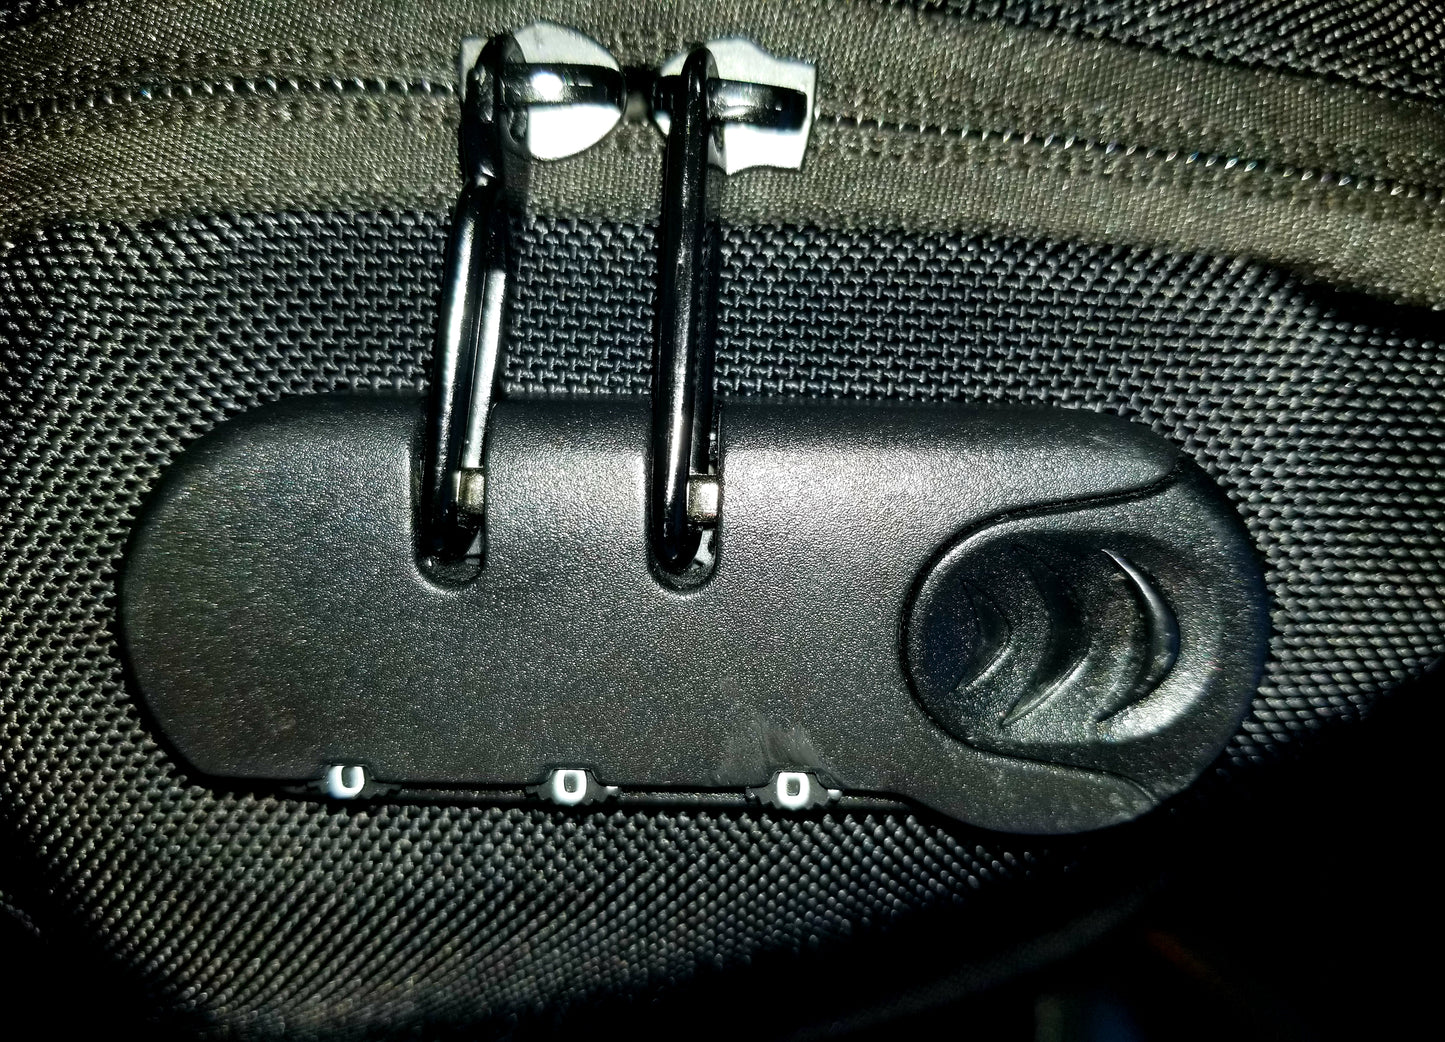 Sling Bag for Men Anti-Theft Waterproof Crossbody Backpack Travel Shoulder Men's Chest Bag